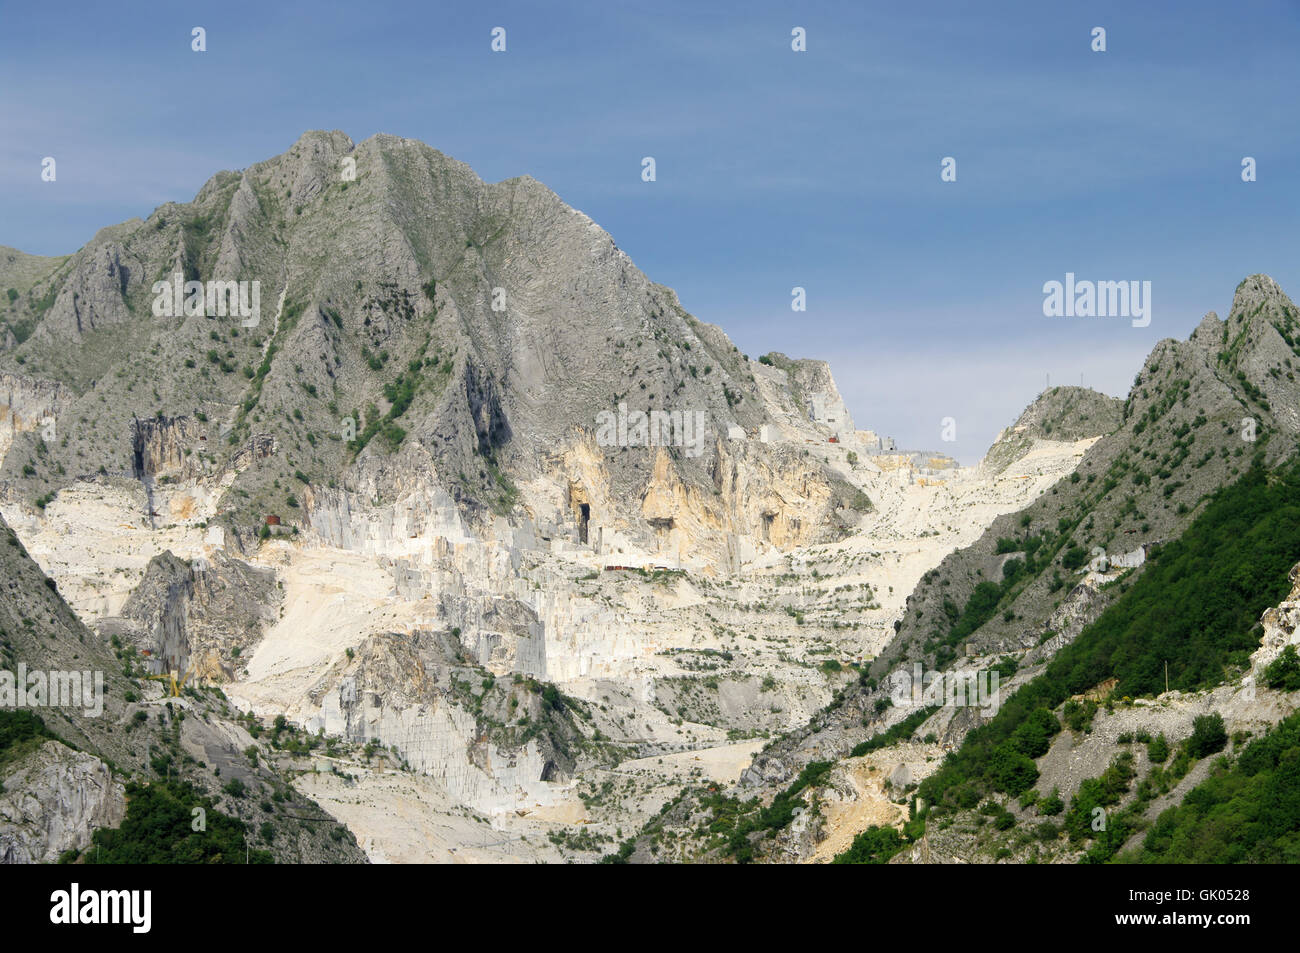 Carrara-Marmor-Steinbruch - Grube Carrara Marmor Stein 02 Stockfoto